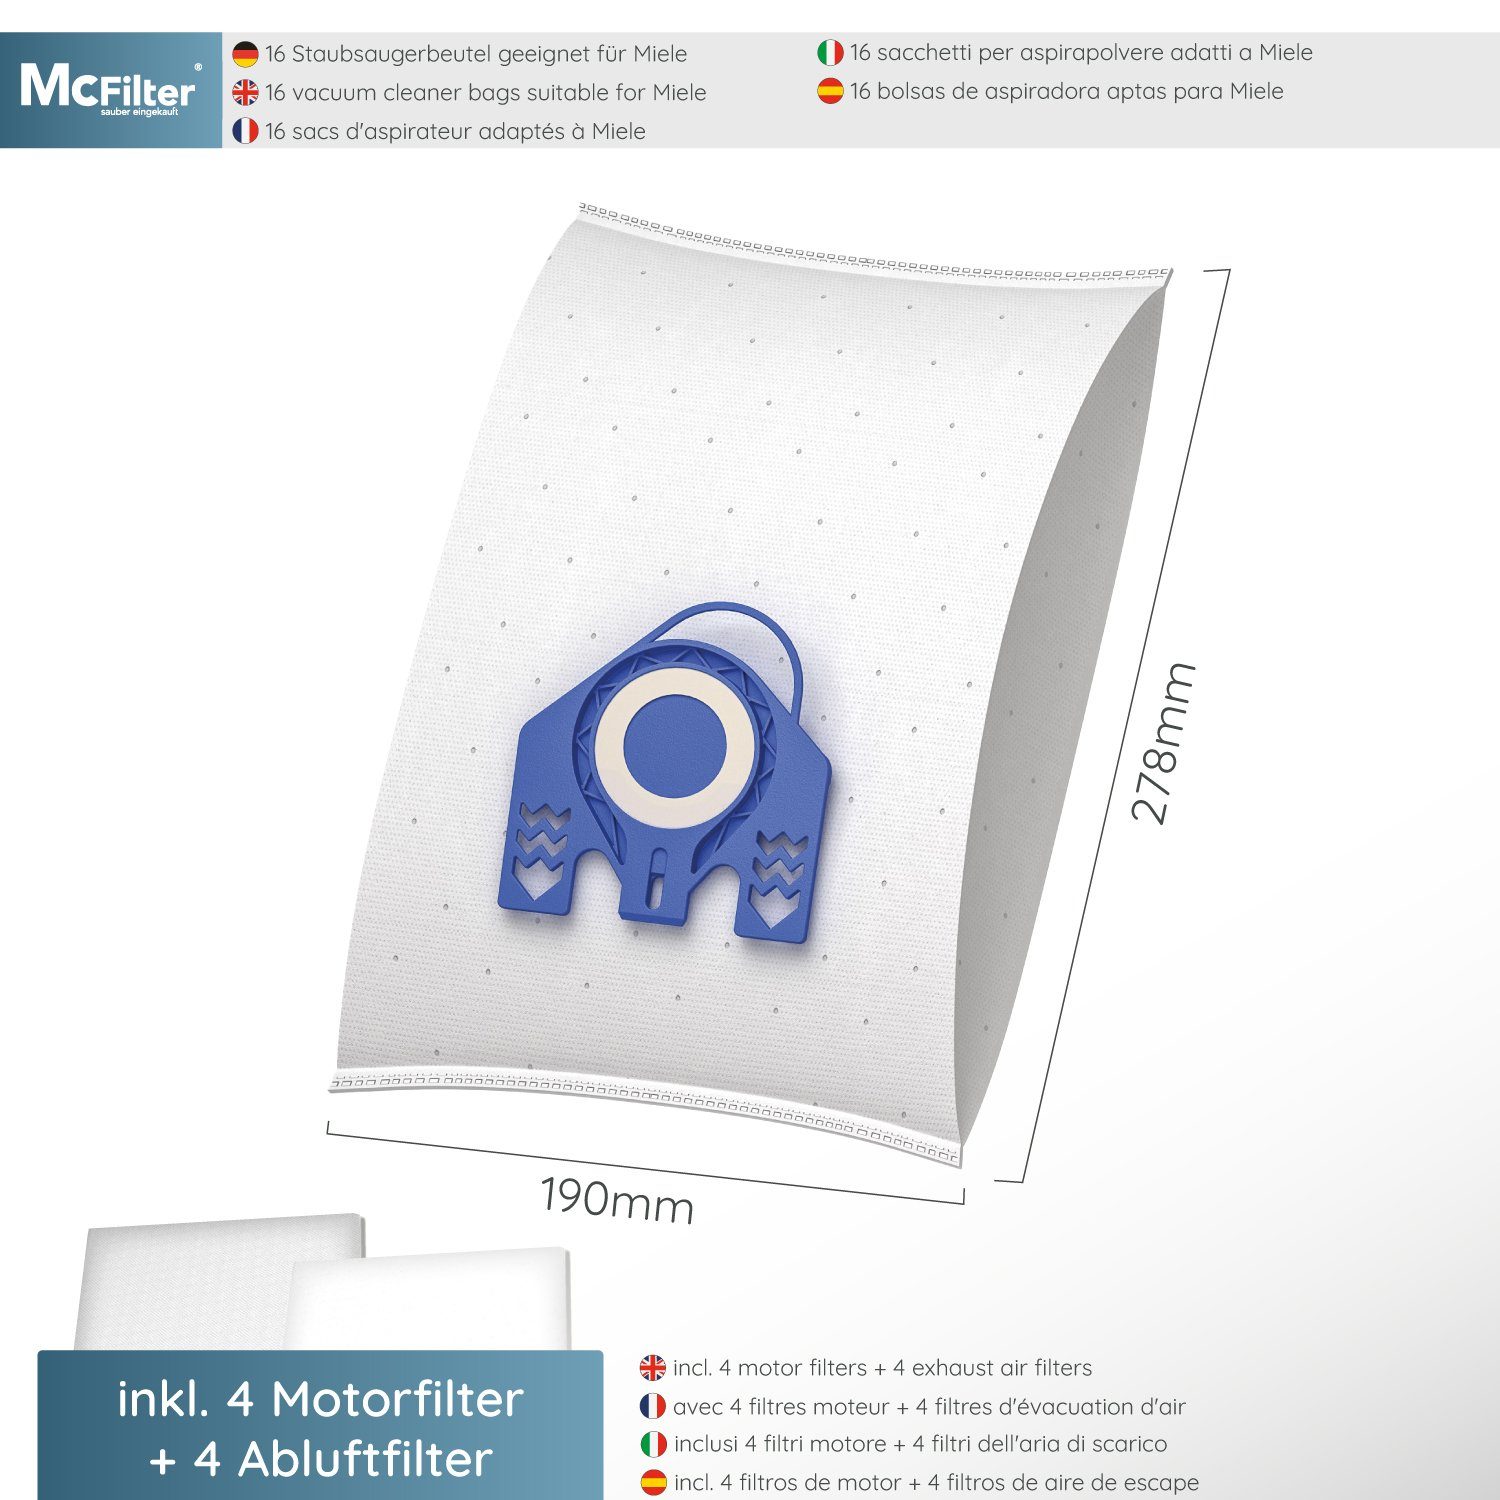 McFilter Staubsaugerbeutel >MAXI BOX< 10408410 - Serie passend 16 inkl. Top 9917730, St., S658 8 Miele für Filter, zu Miele wie Staubsauger, (16+8), S600 Alternative